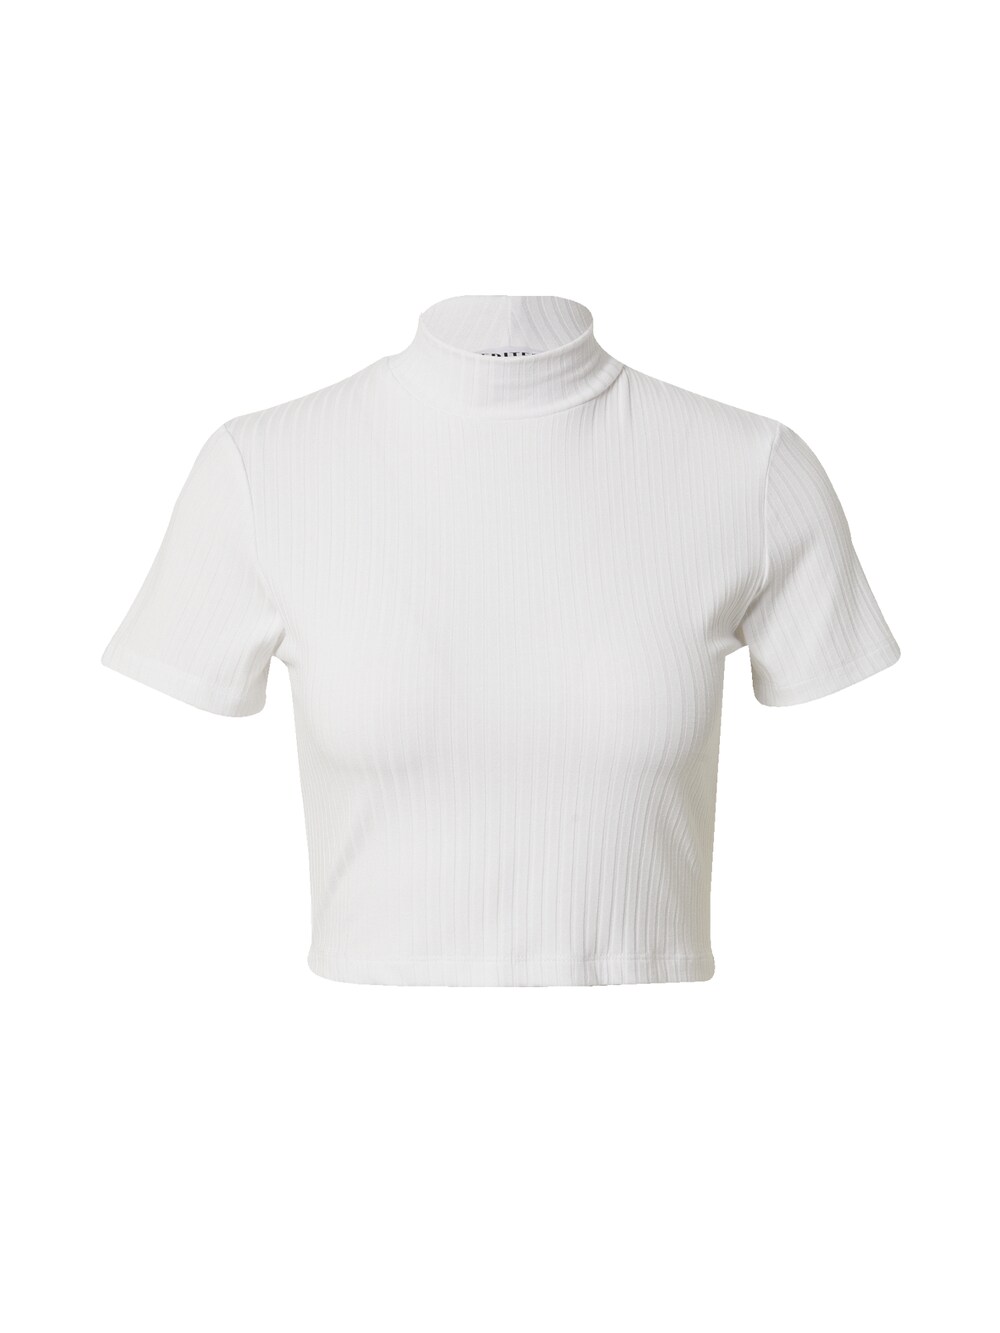 Рубашка EDITED Kevina, белый рубашка edited oxana белый